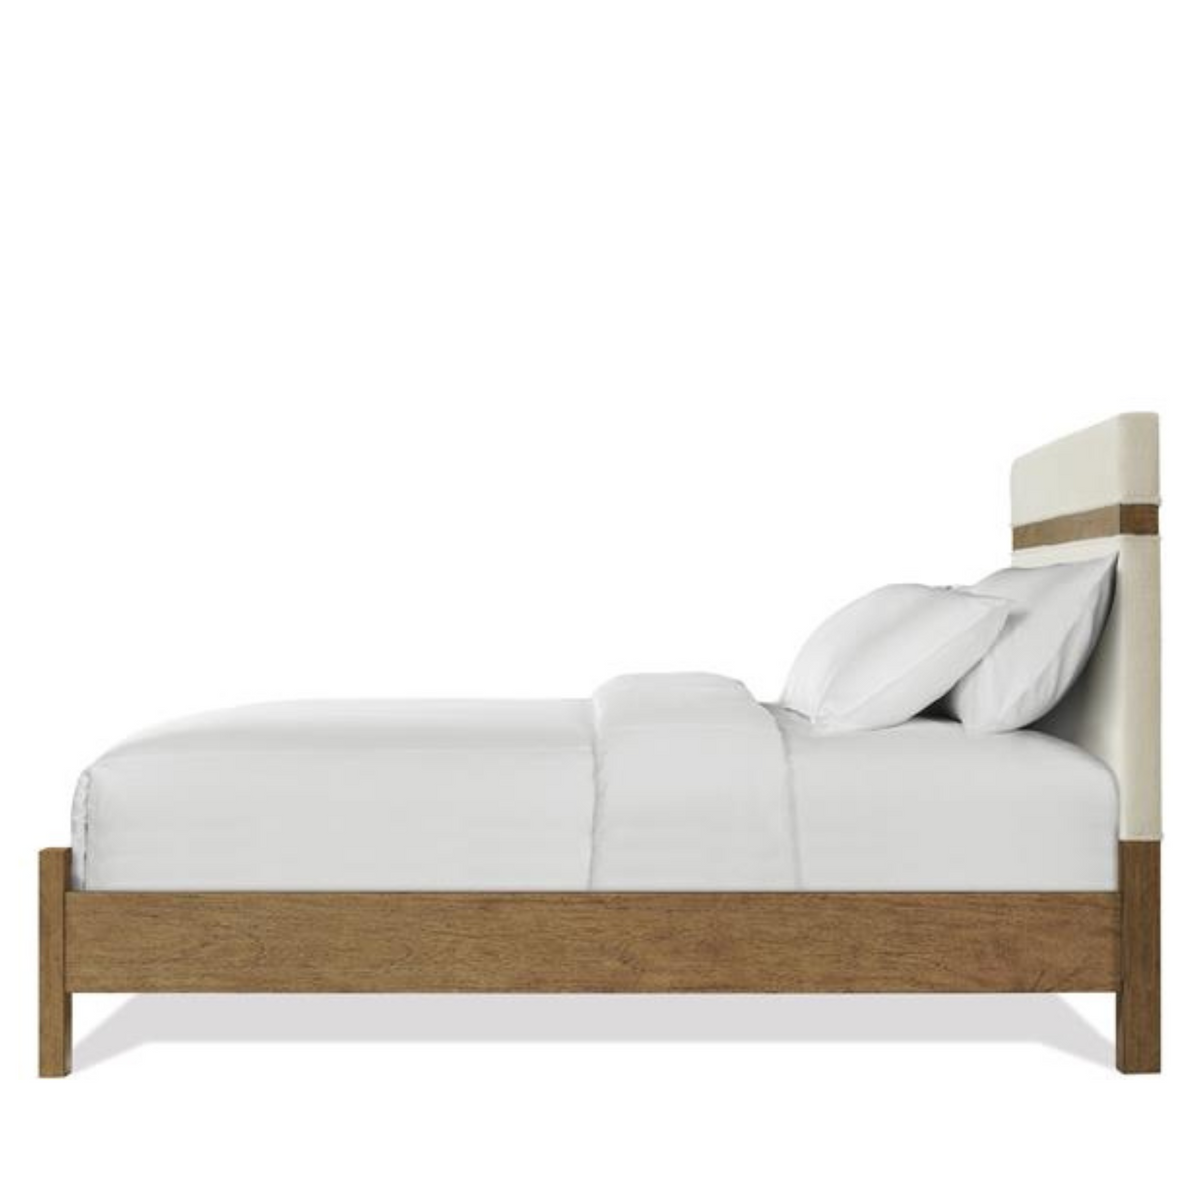 Bozeman Upholstered Bed